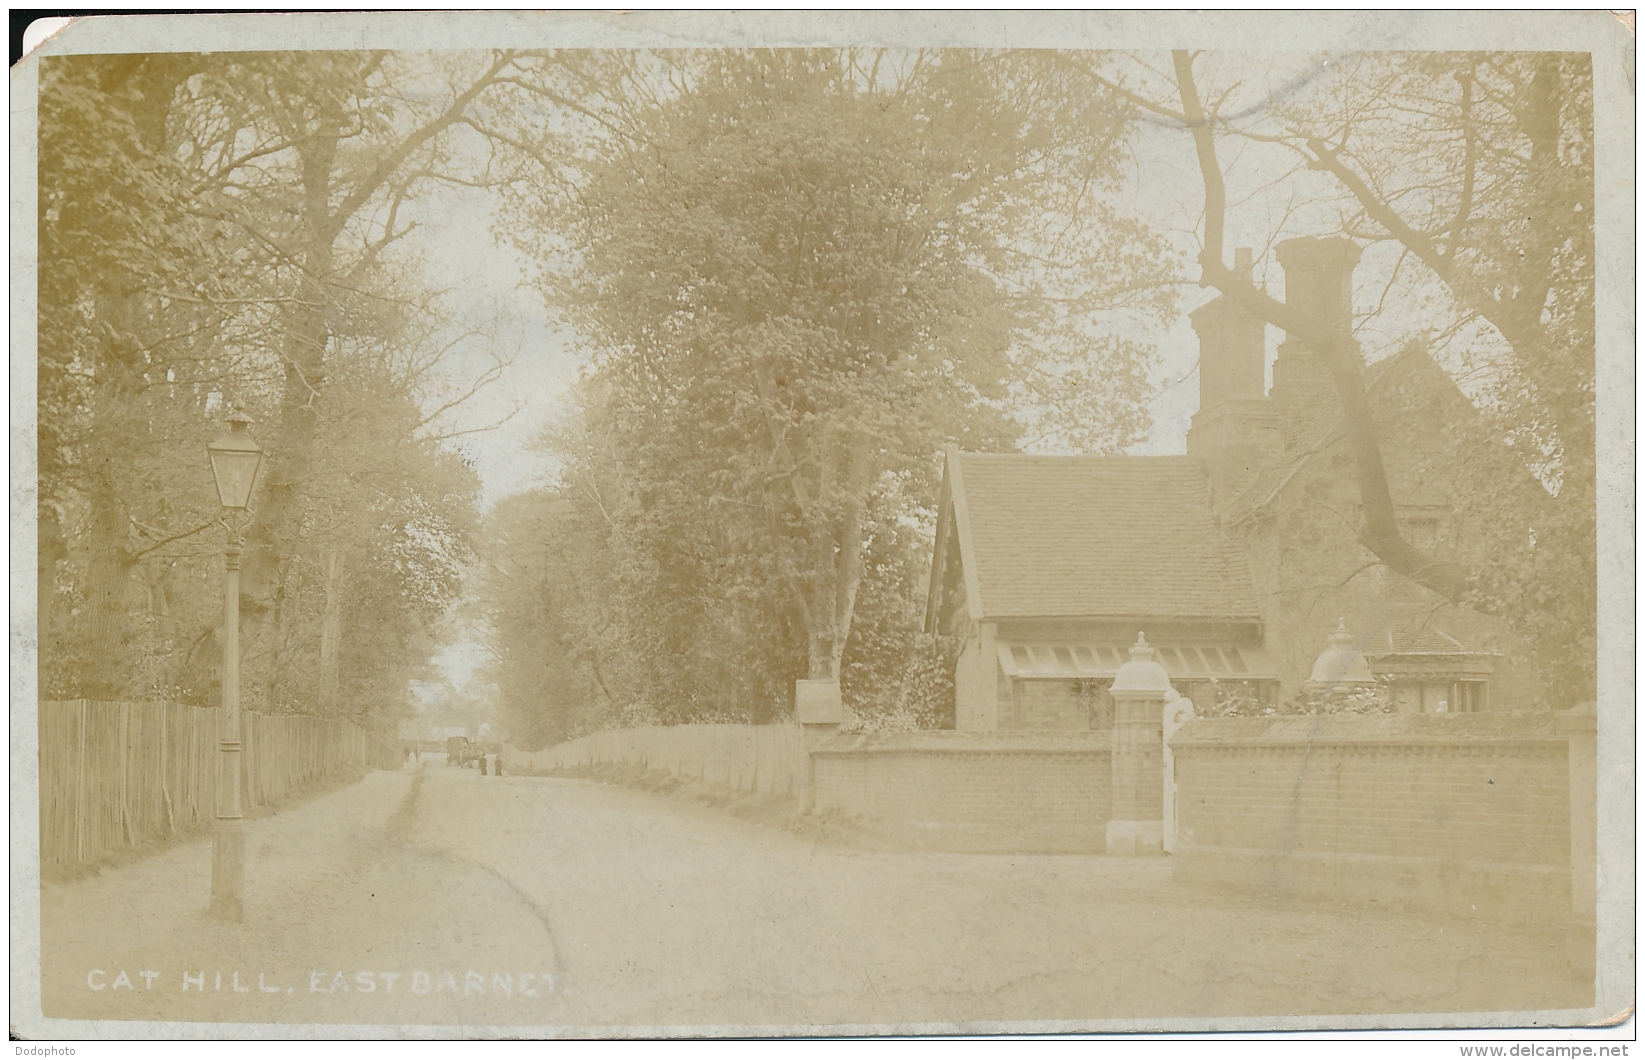 PC77224 Cat Hill. East Barnet. H. Cooper. 1909 - Monde